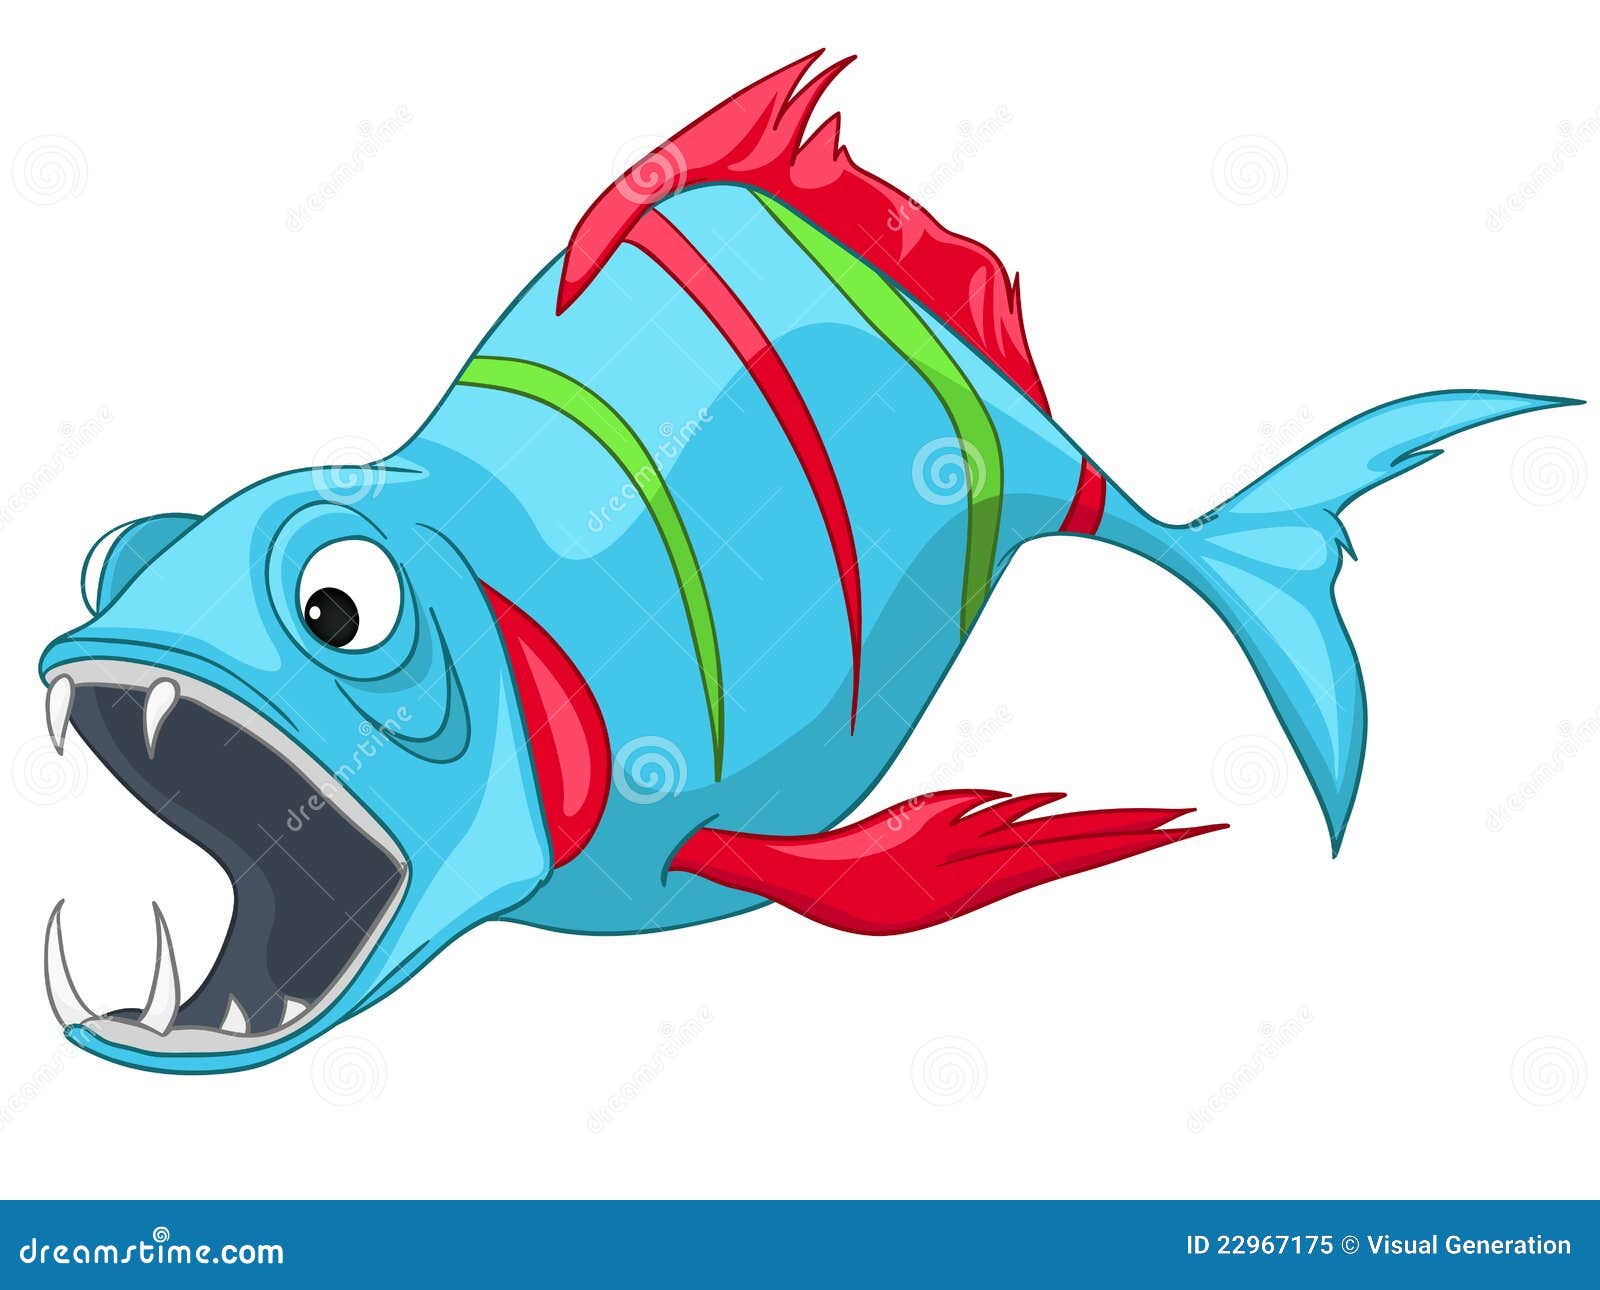 Cartoon Character Fish Royalty Free Stock Photo - Image: 22967175